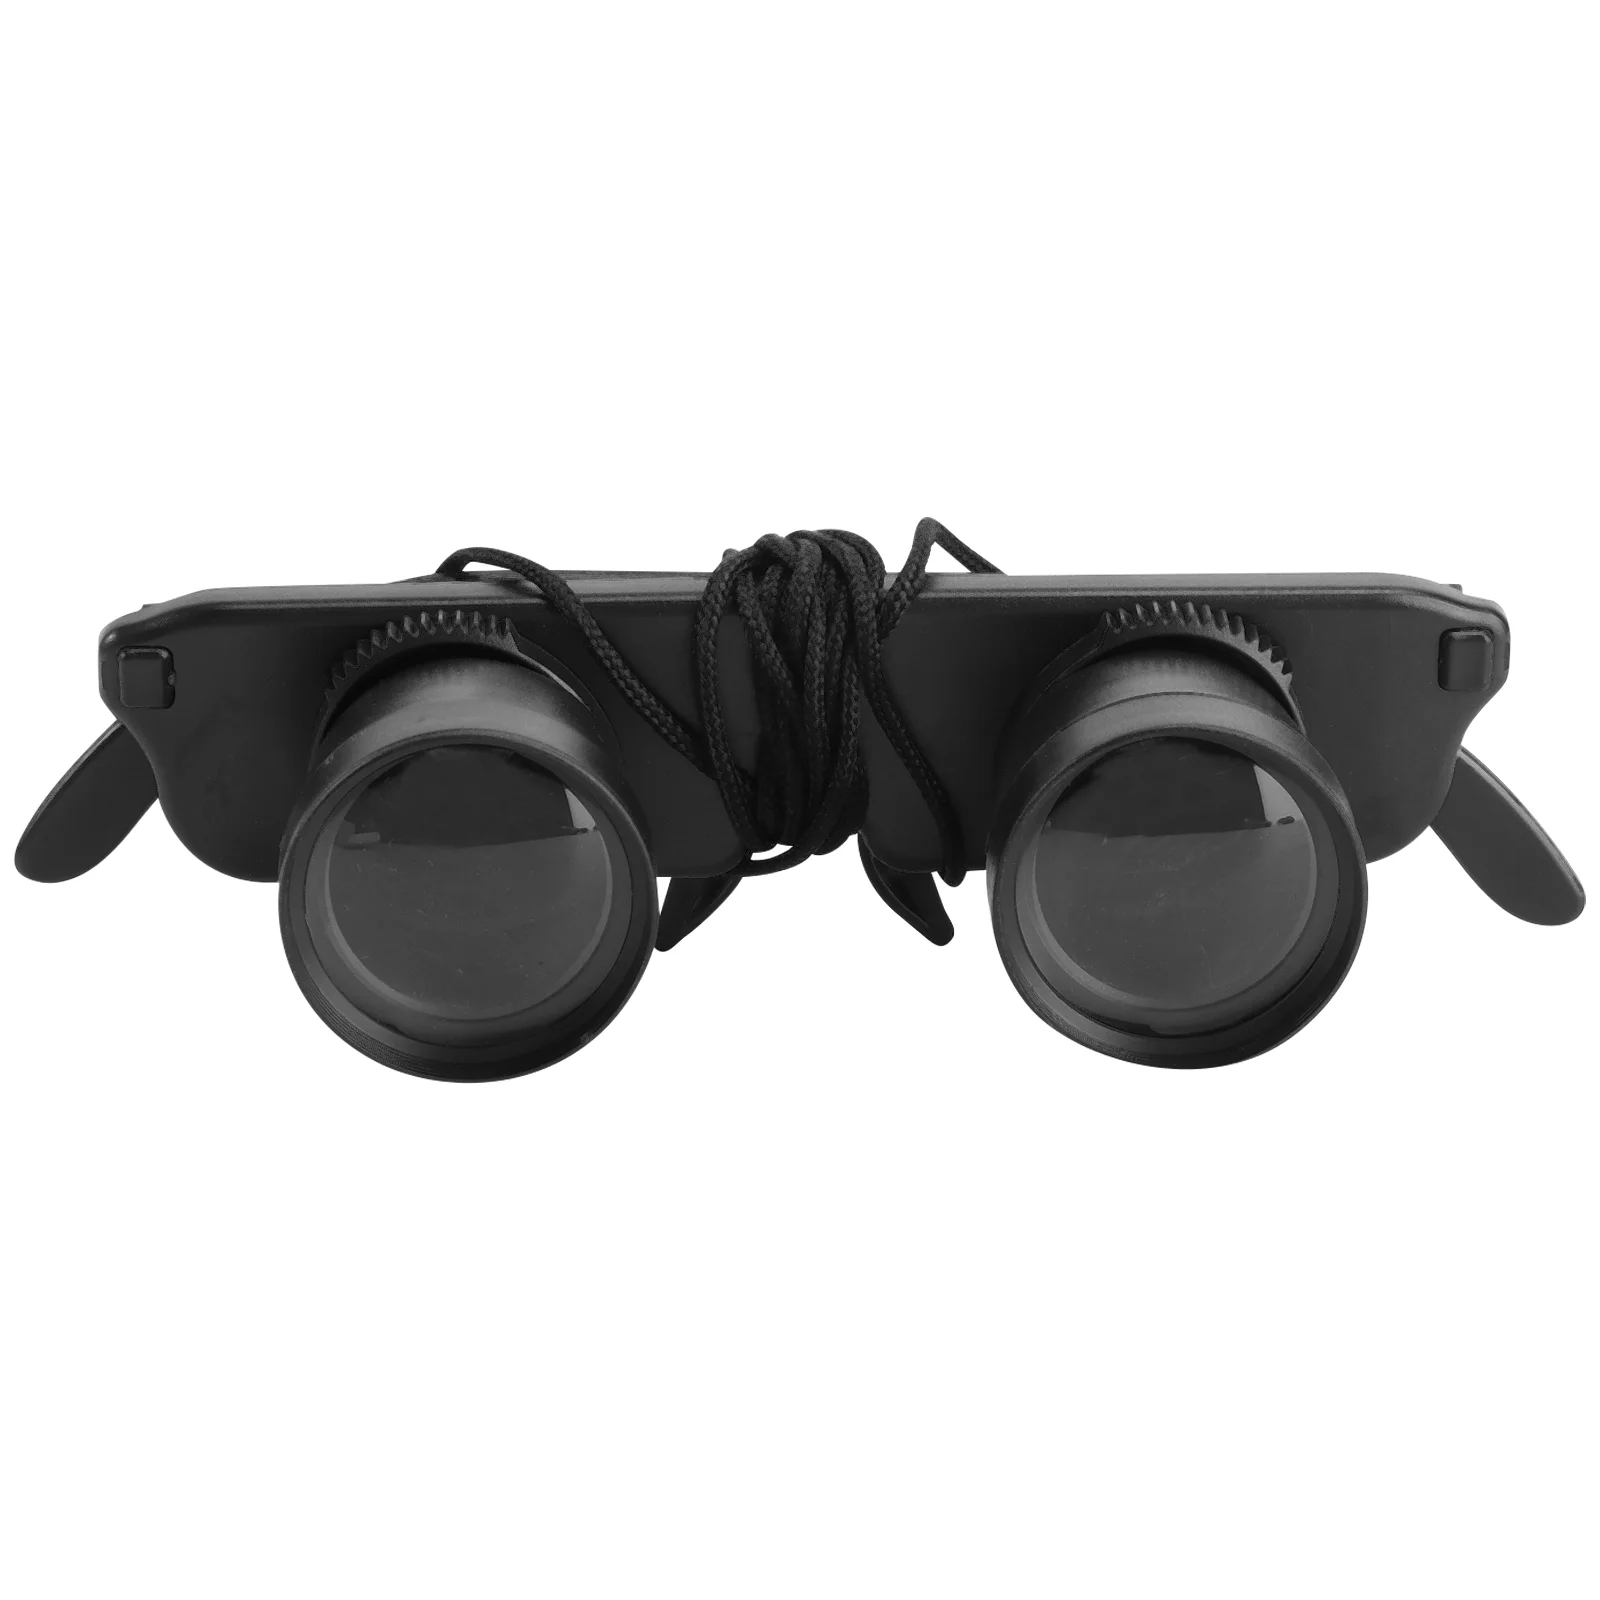 

Far Mirror Fishing Gear Hands Free Magnifying Glass Outdoor High Definition Headwear Headworn Clear PC Travel